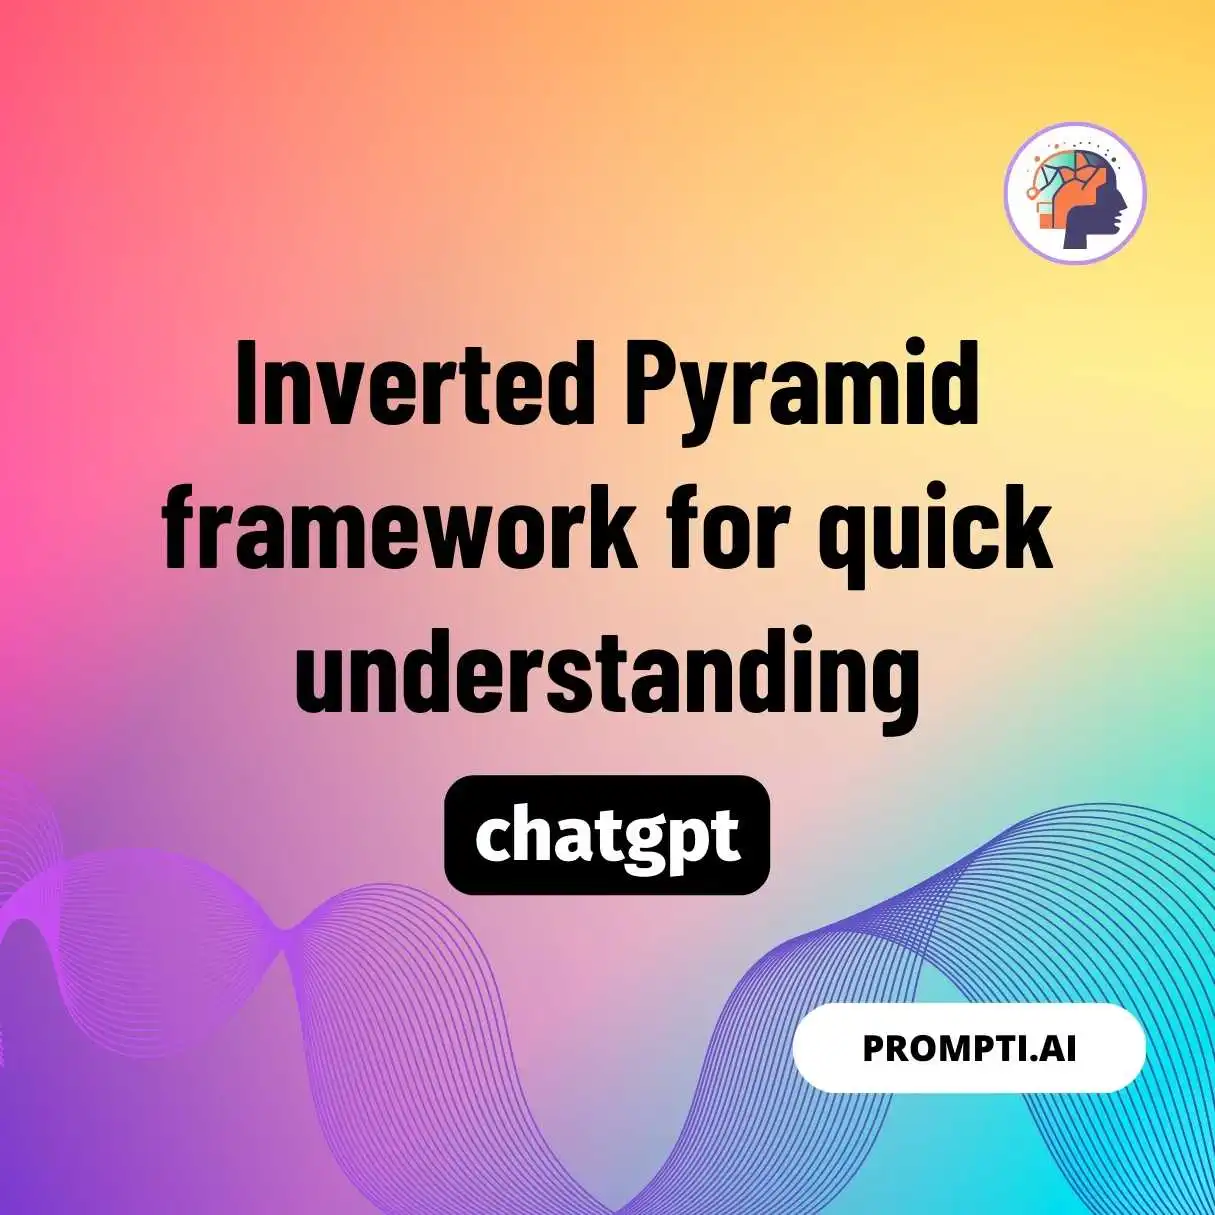 Inverted Pyramid framework for quick understanding